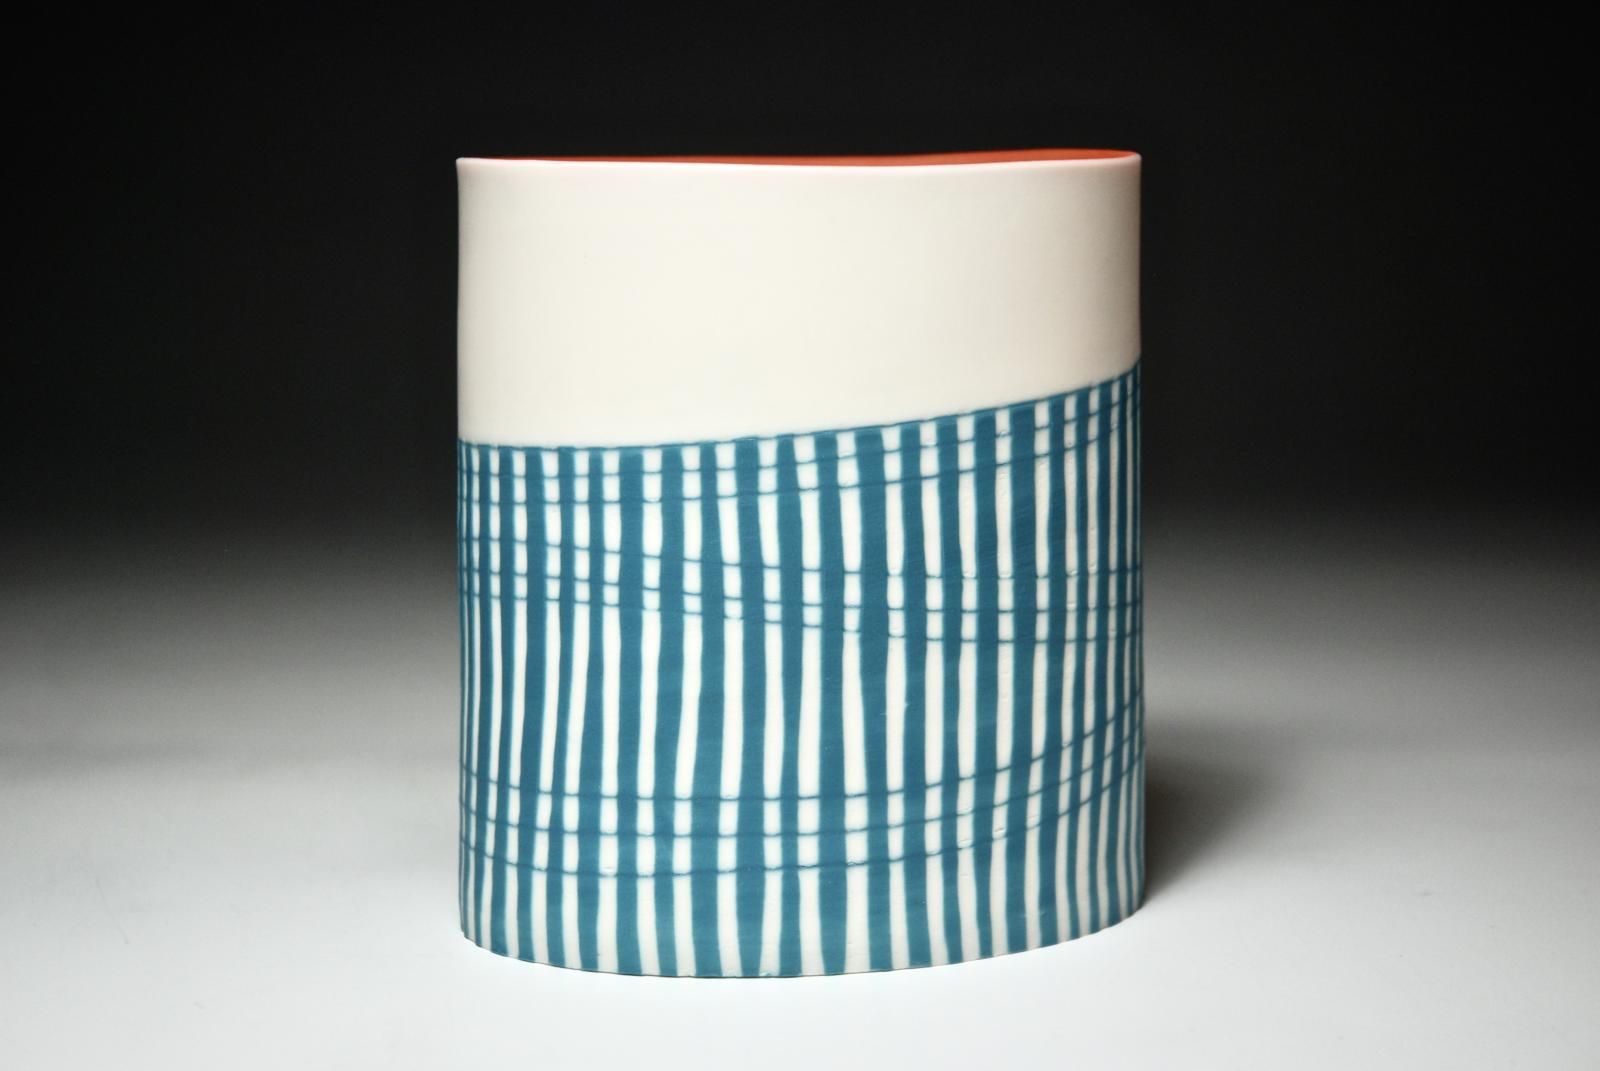 Oval Vase II by Lara Scobie